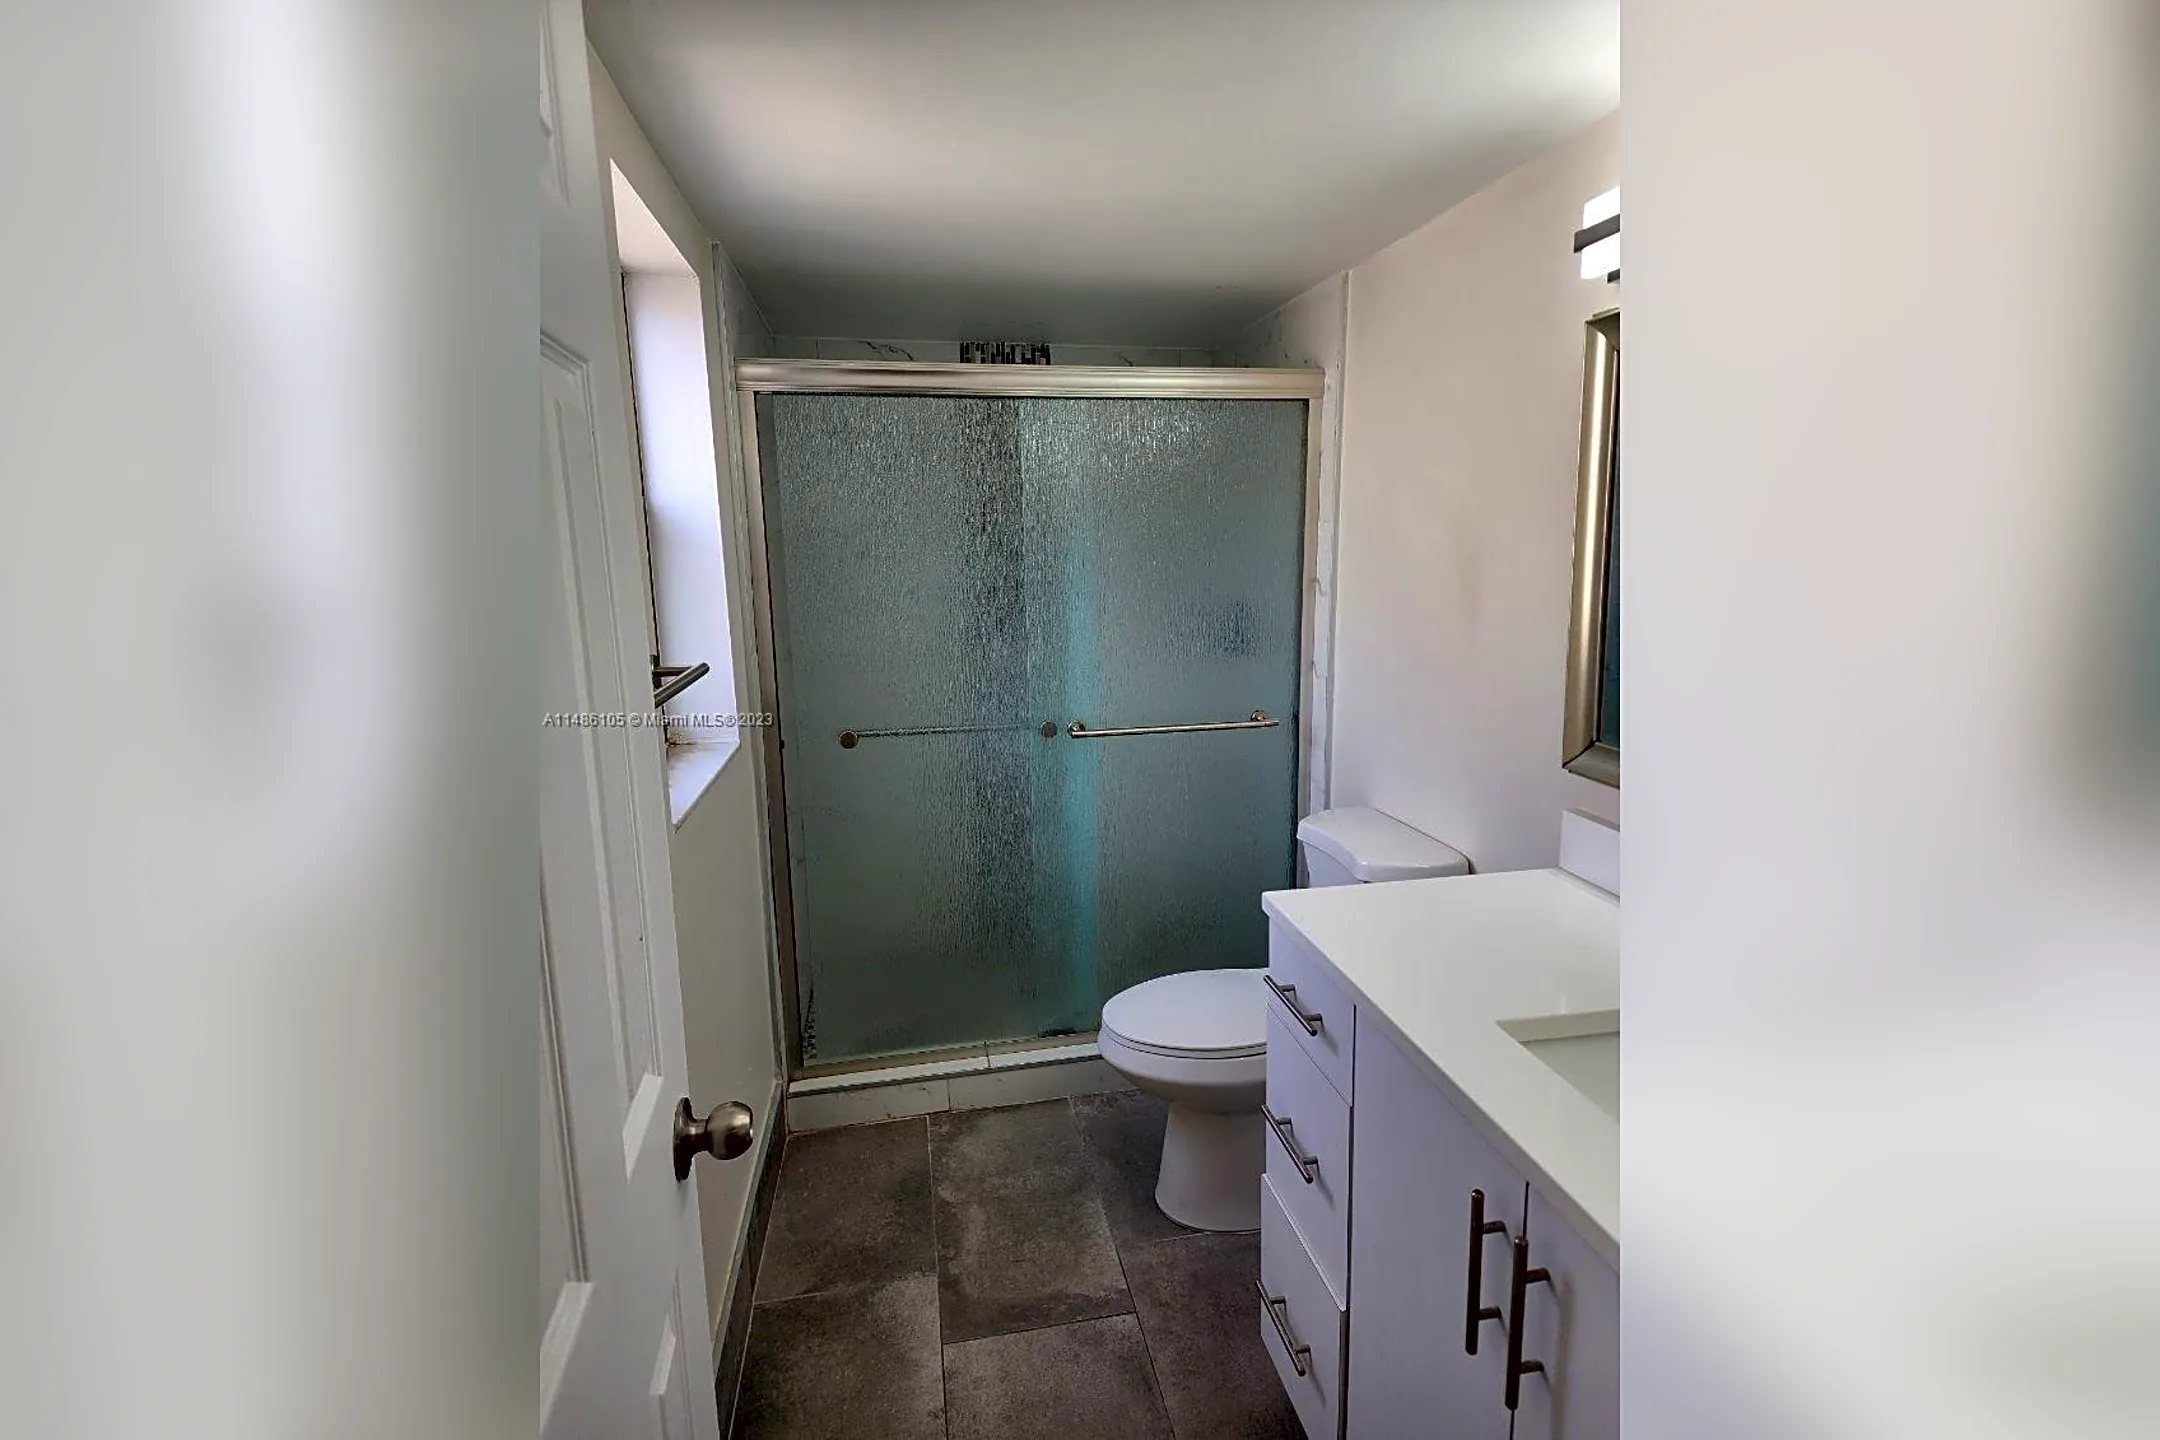 Bathroom - 11322 Taft St #11322 - Pembroke Pines, FL